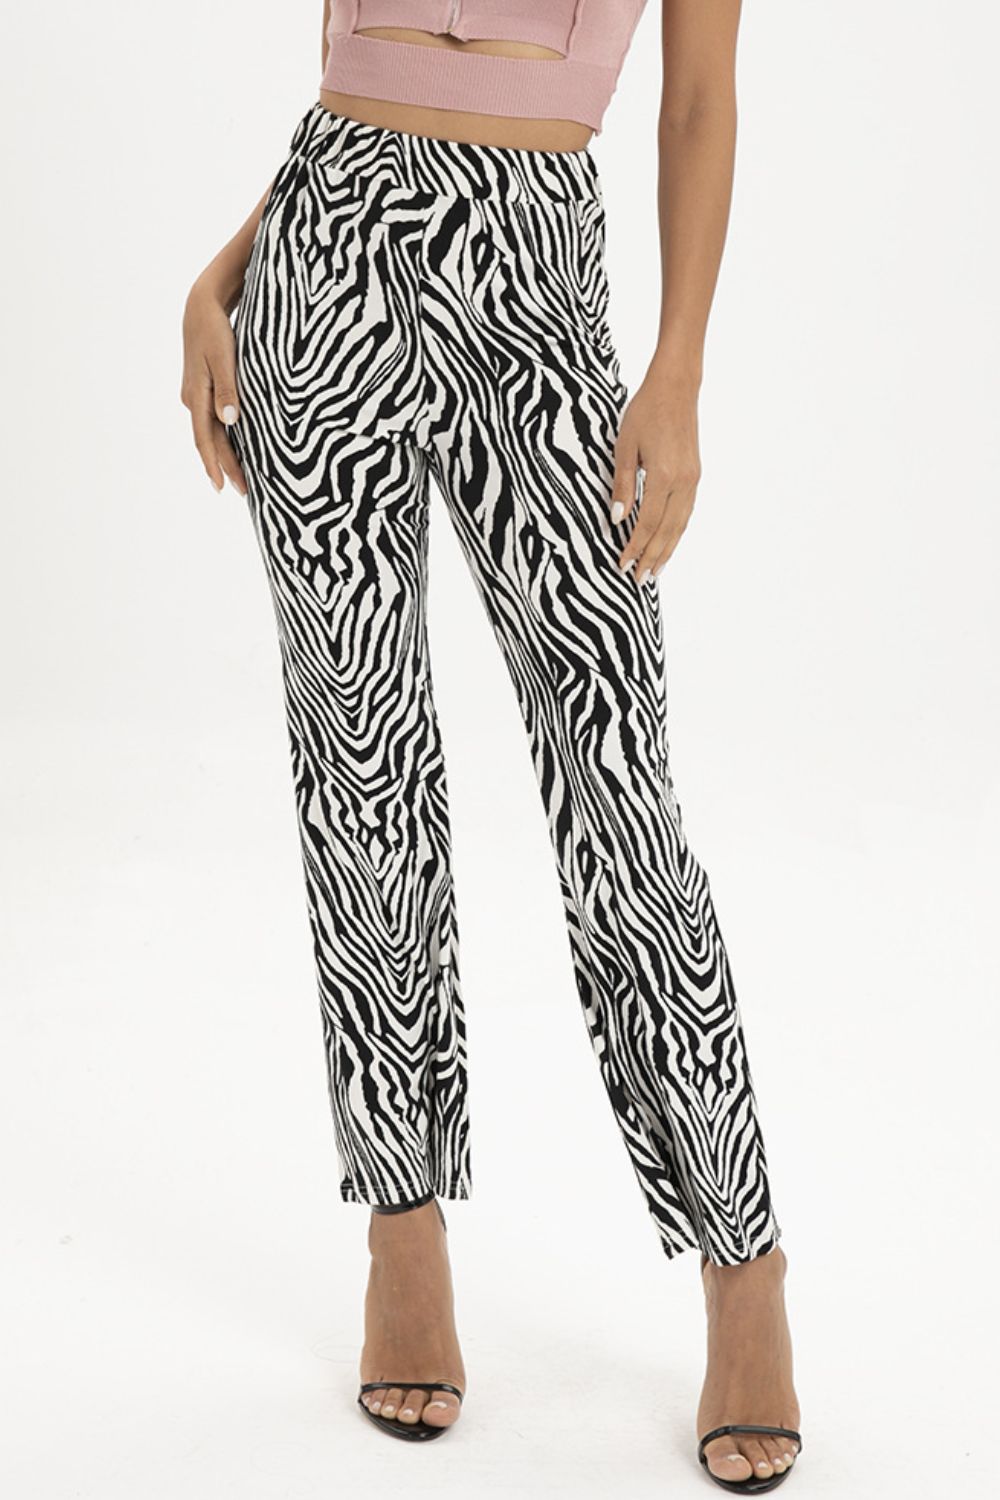 ZEBRA Zebra Print Straight Leg Pants - women's pants at TFC&H Co.